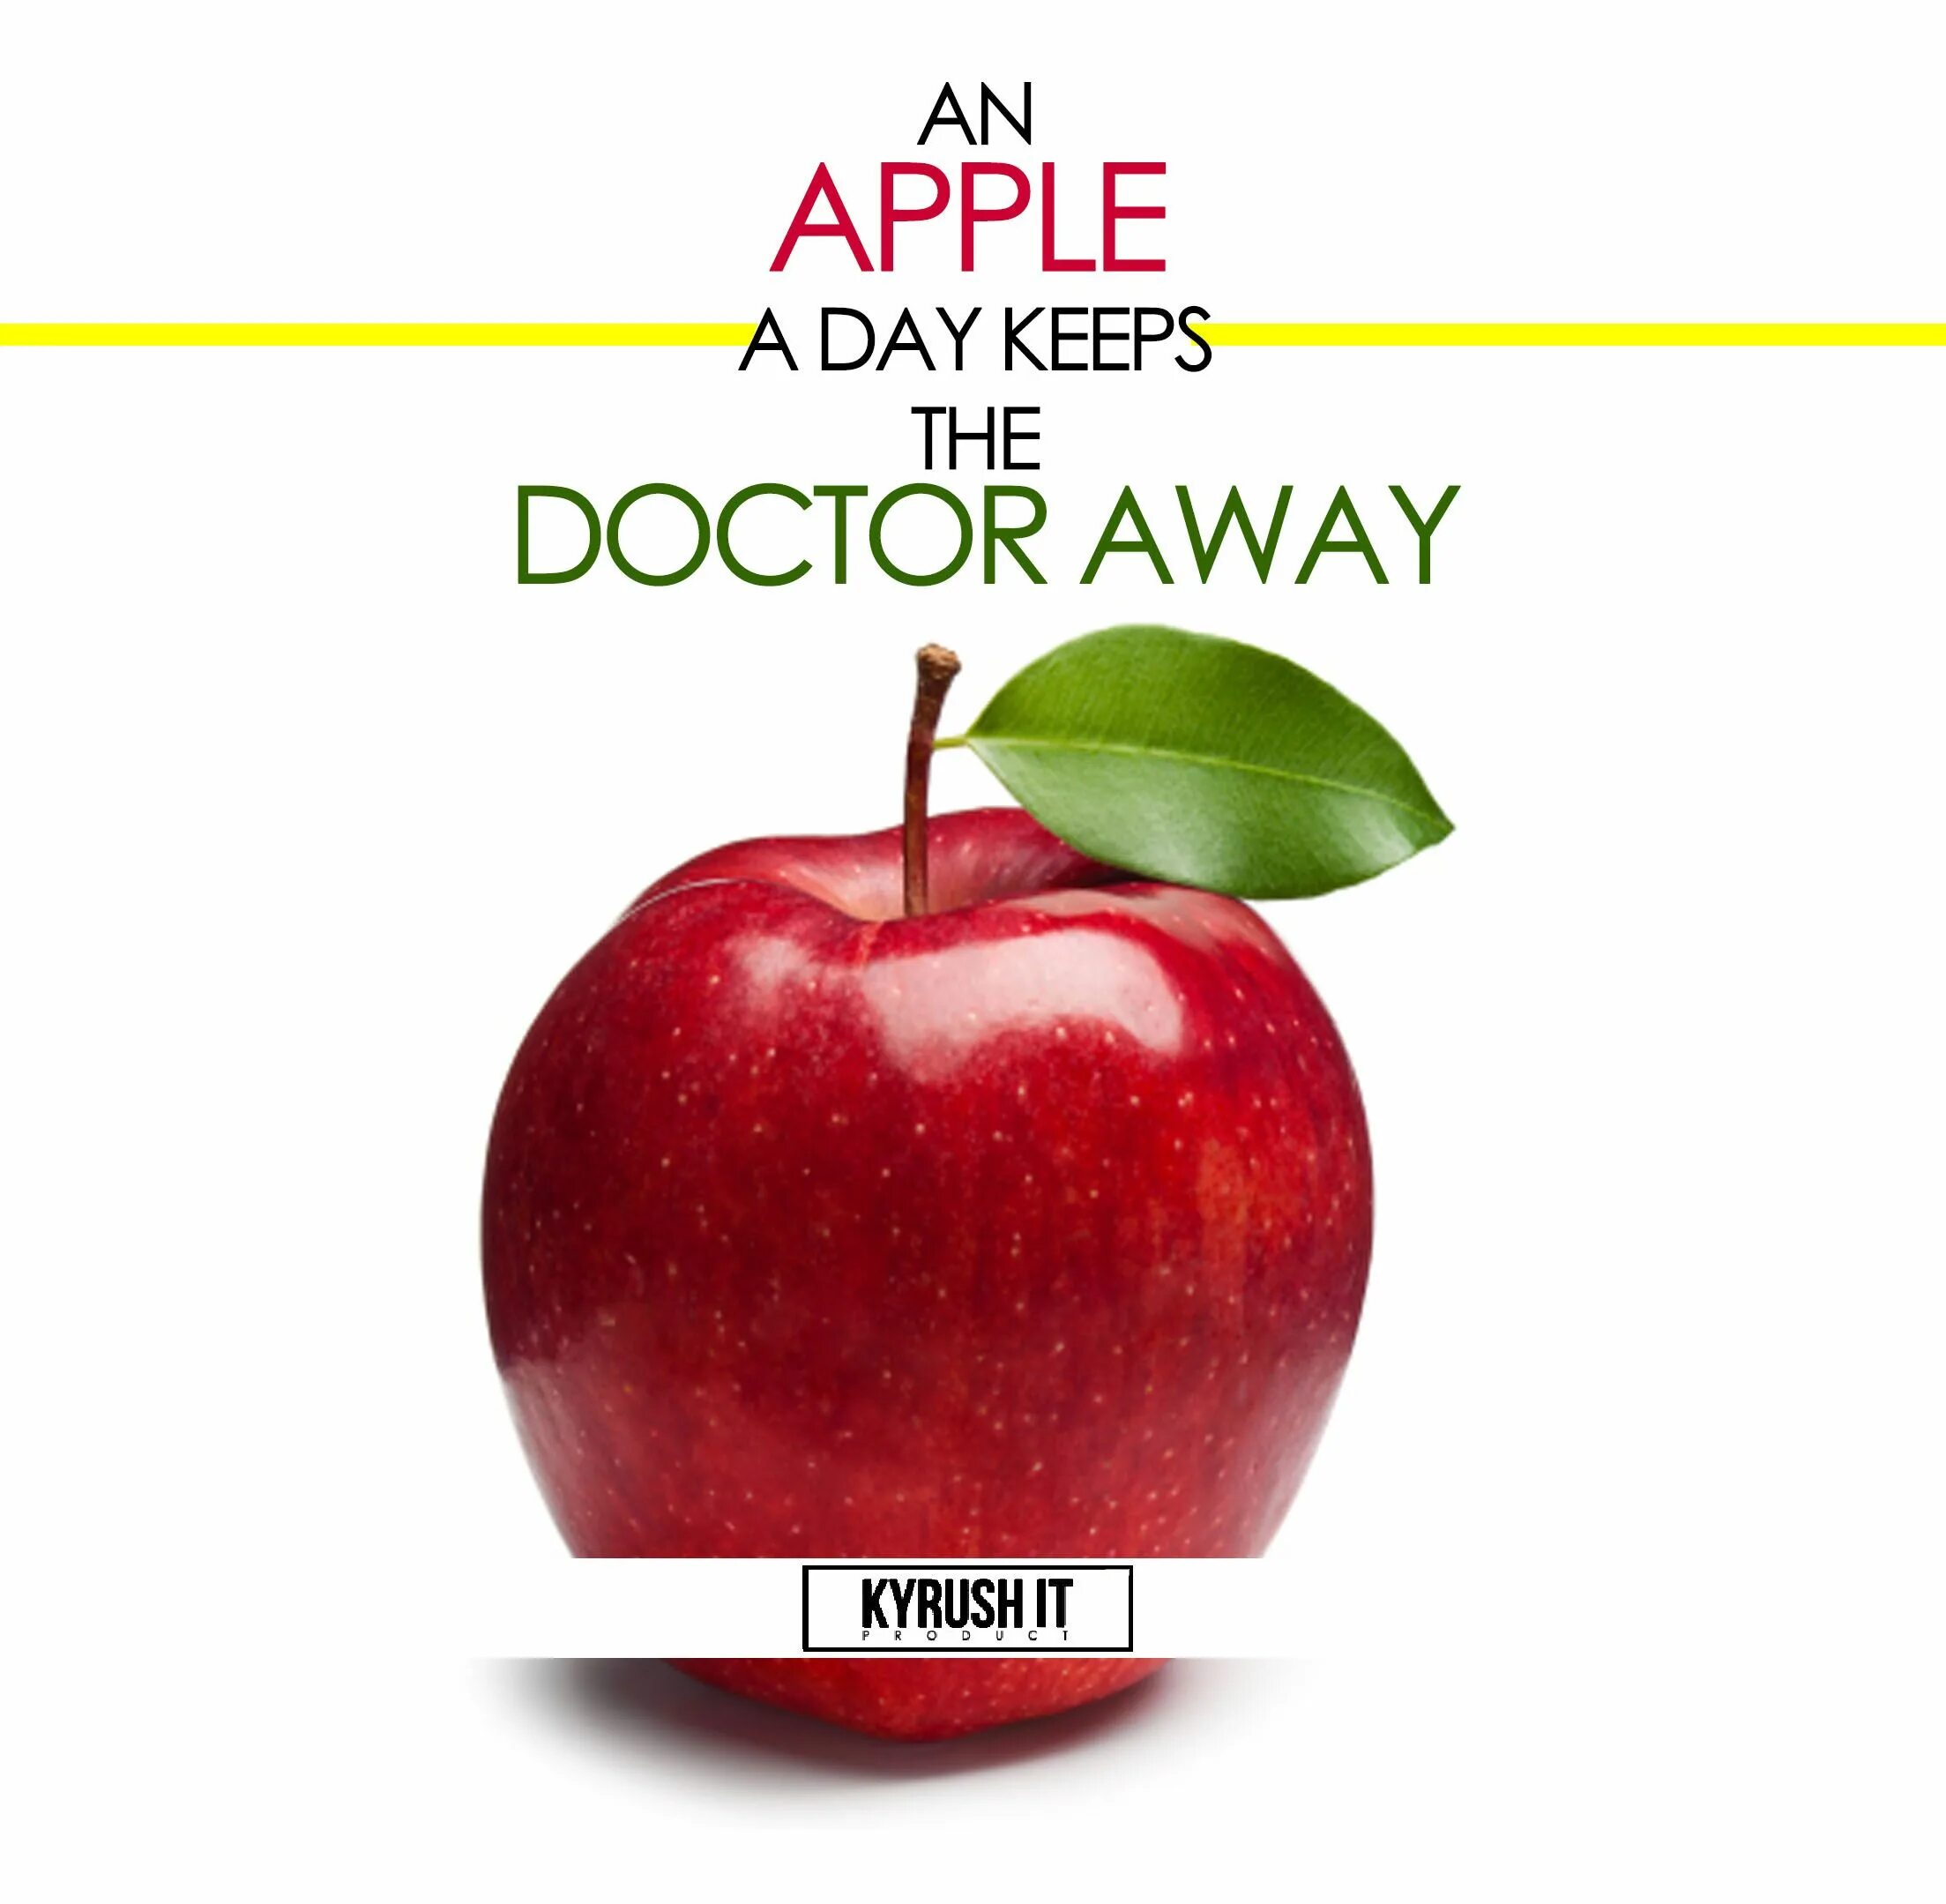 An apple a day keeps the away. Apple Day. An Apple a Day keeps the Doctor away. An Apple a Day keeps. One Apple a Day keeps Doctors away.